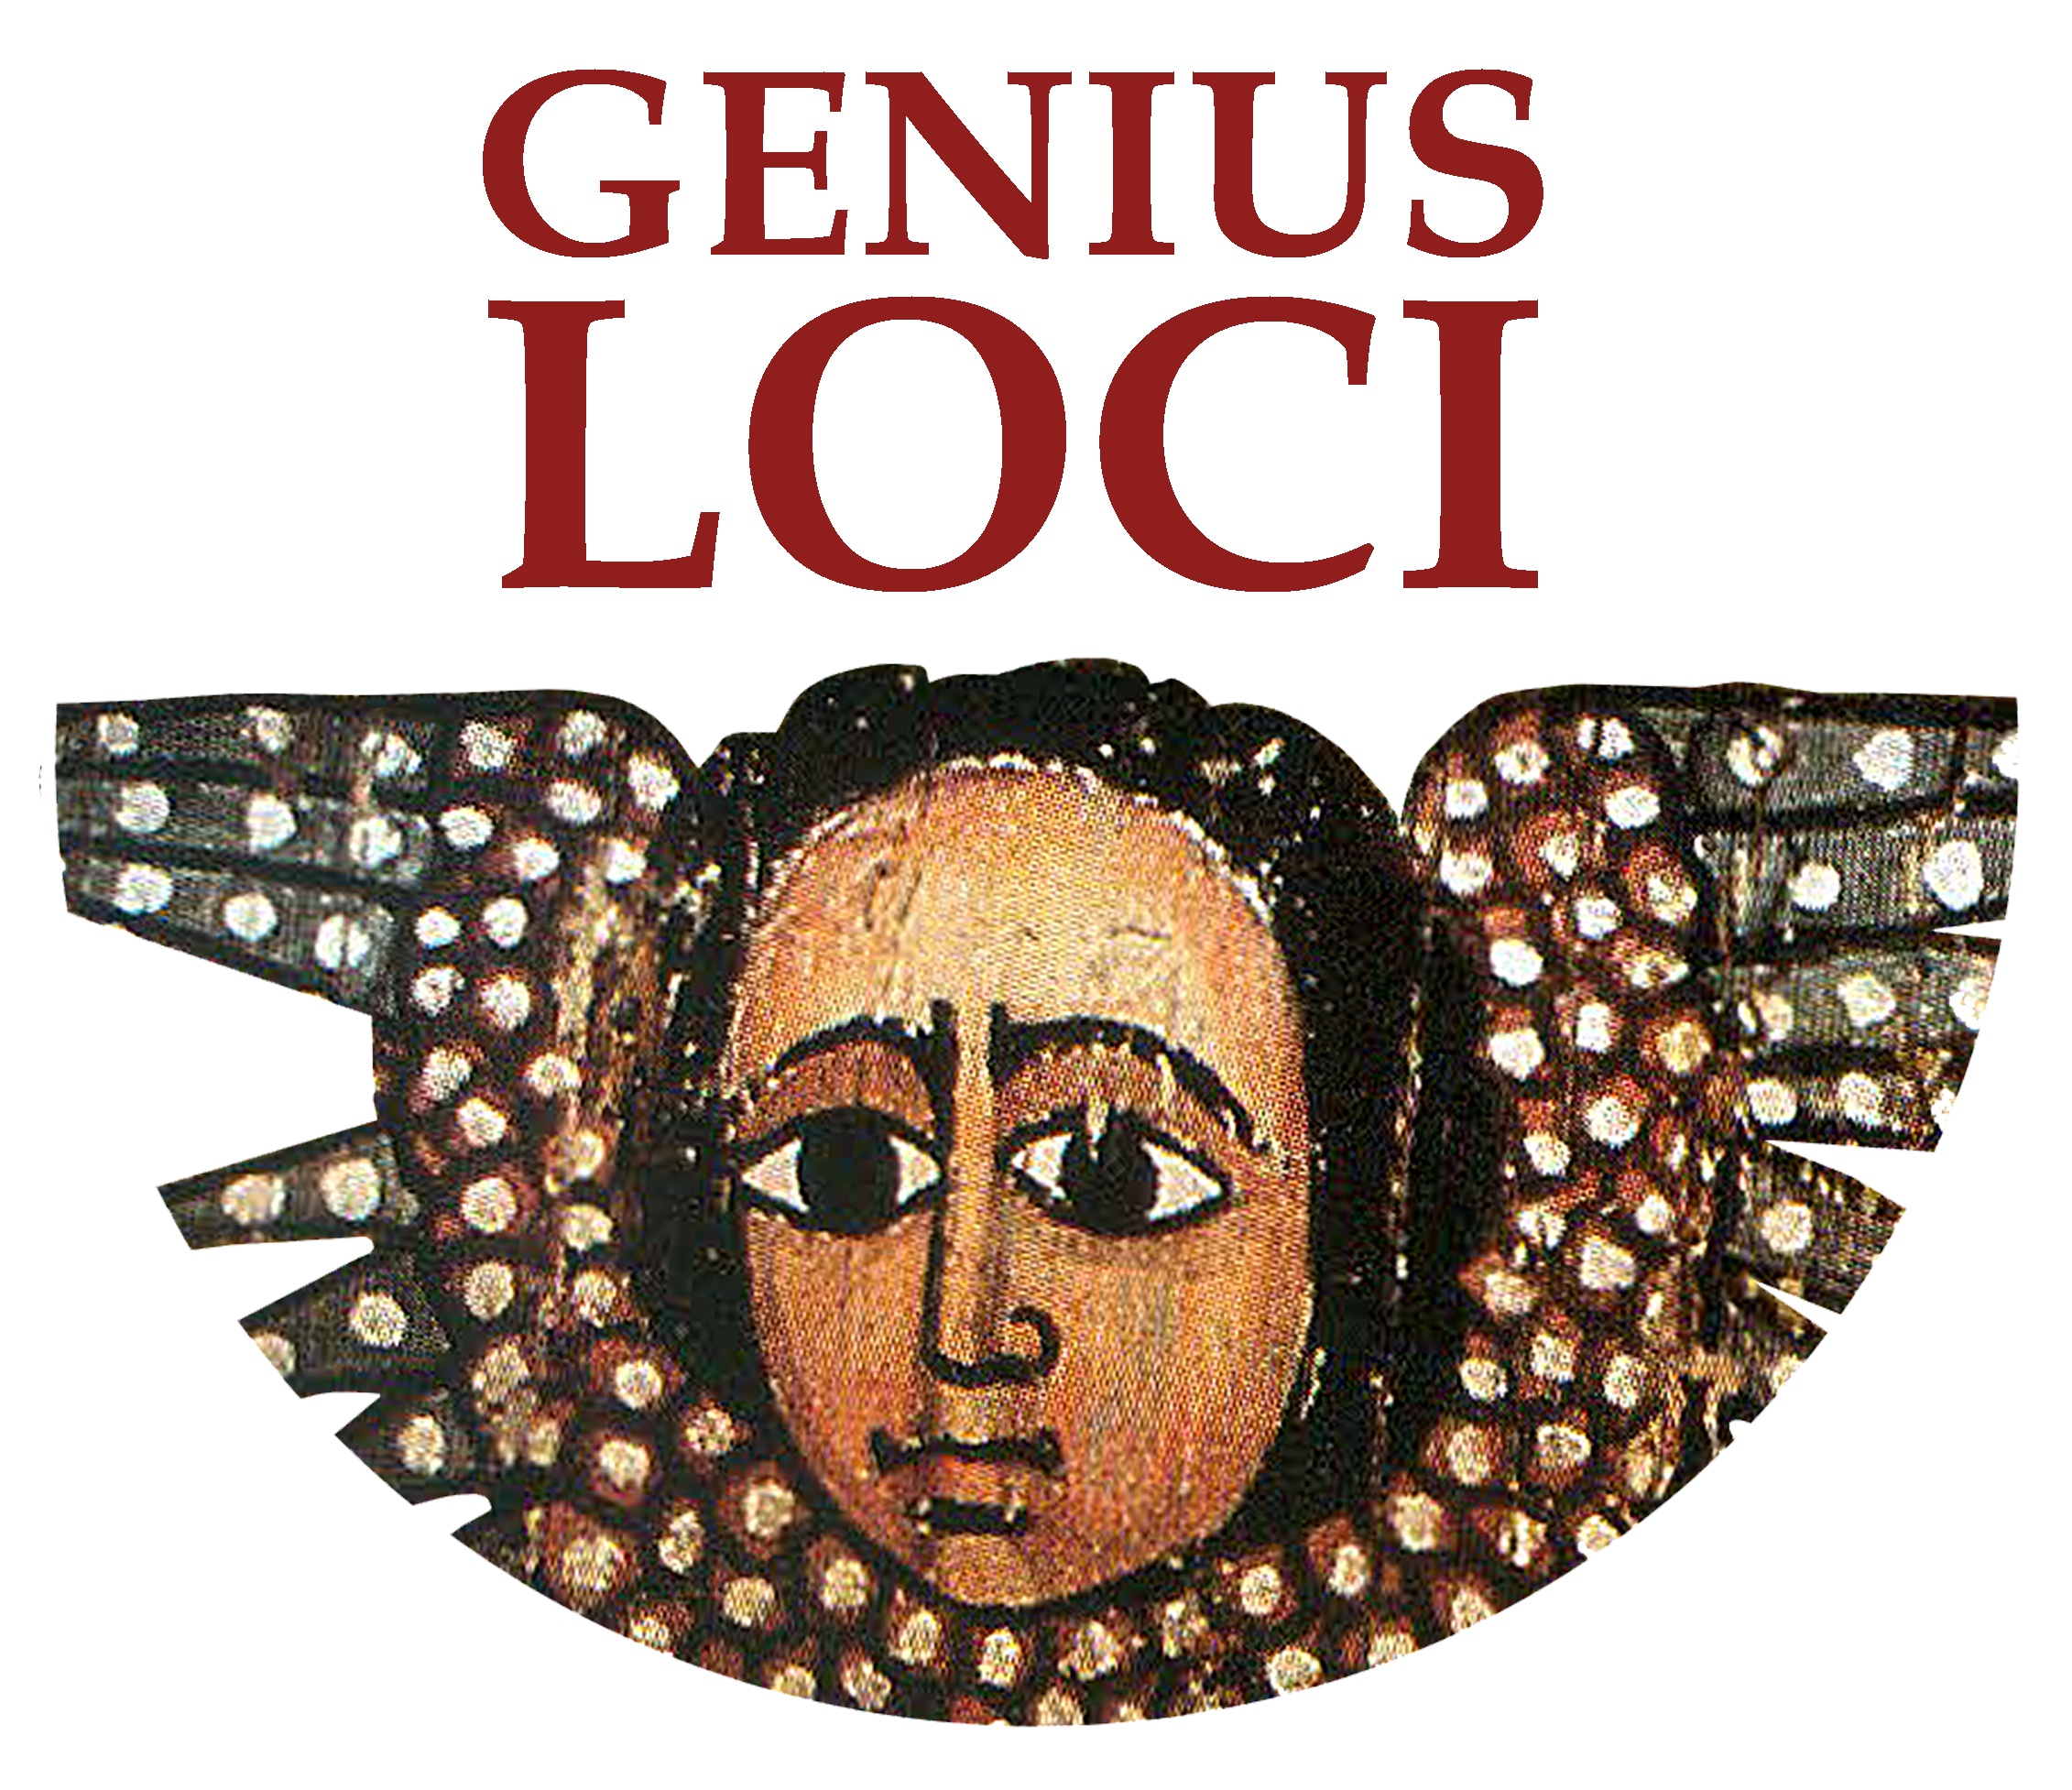 Genius Loci – performing arts between heritage and future